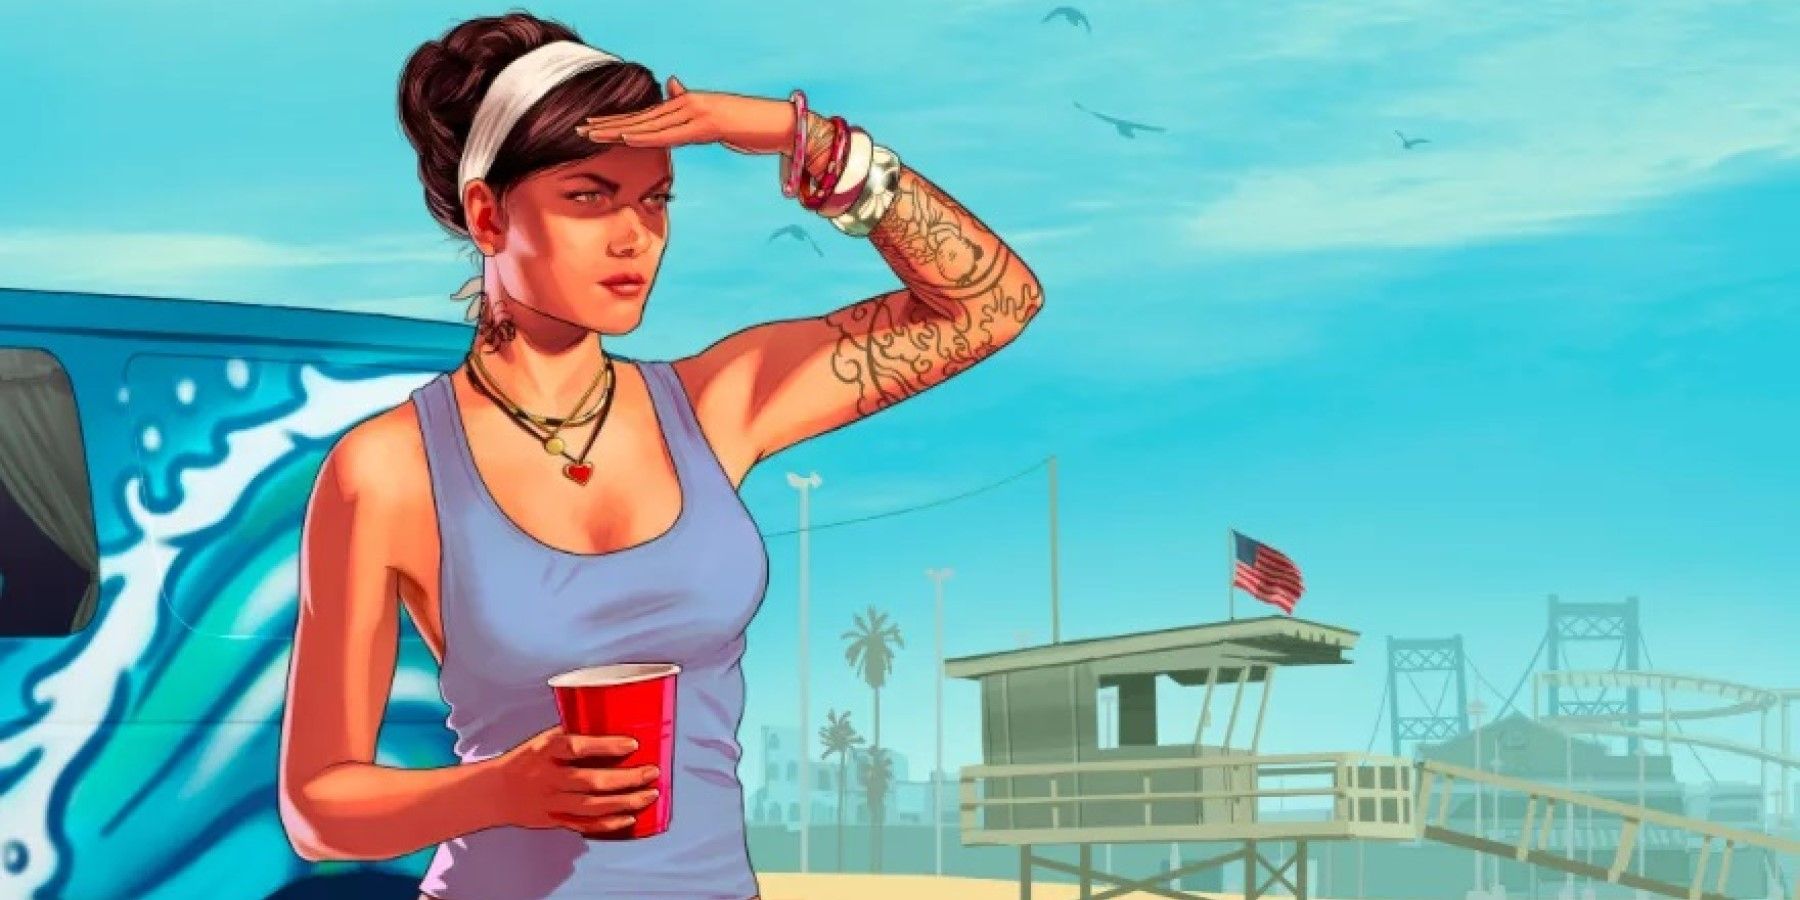 Alle nylige Grand Theft Auto 6 rygter, lækager og rapporter